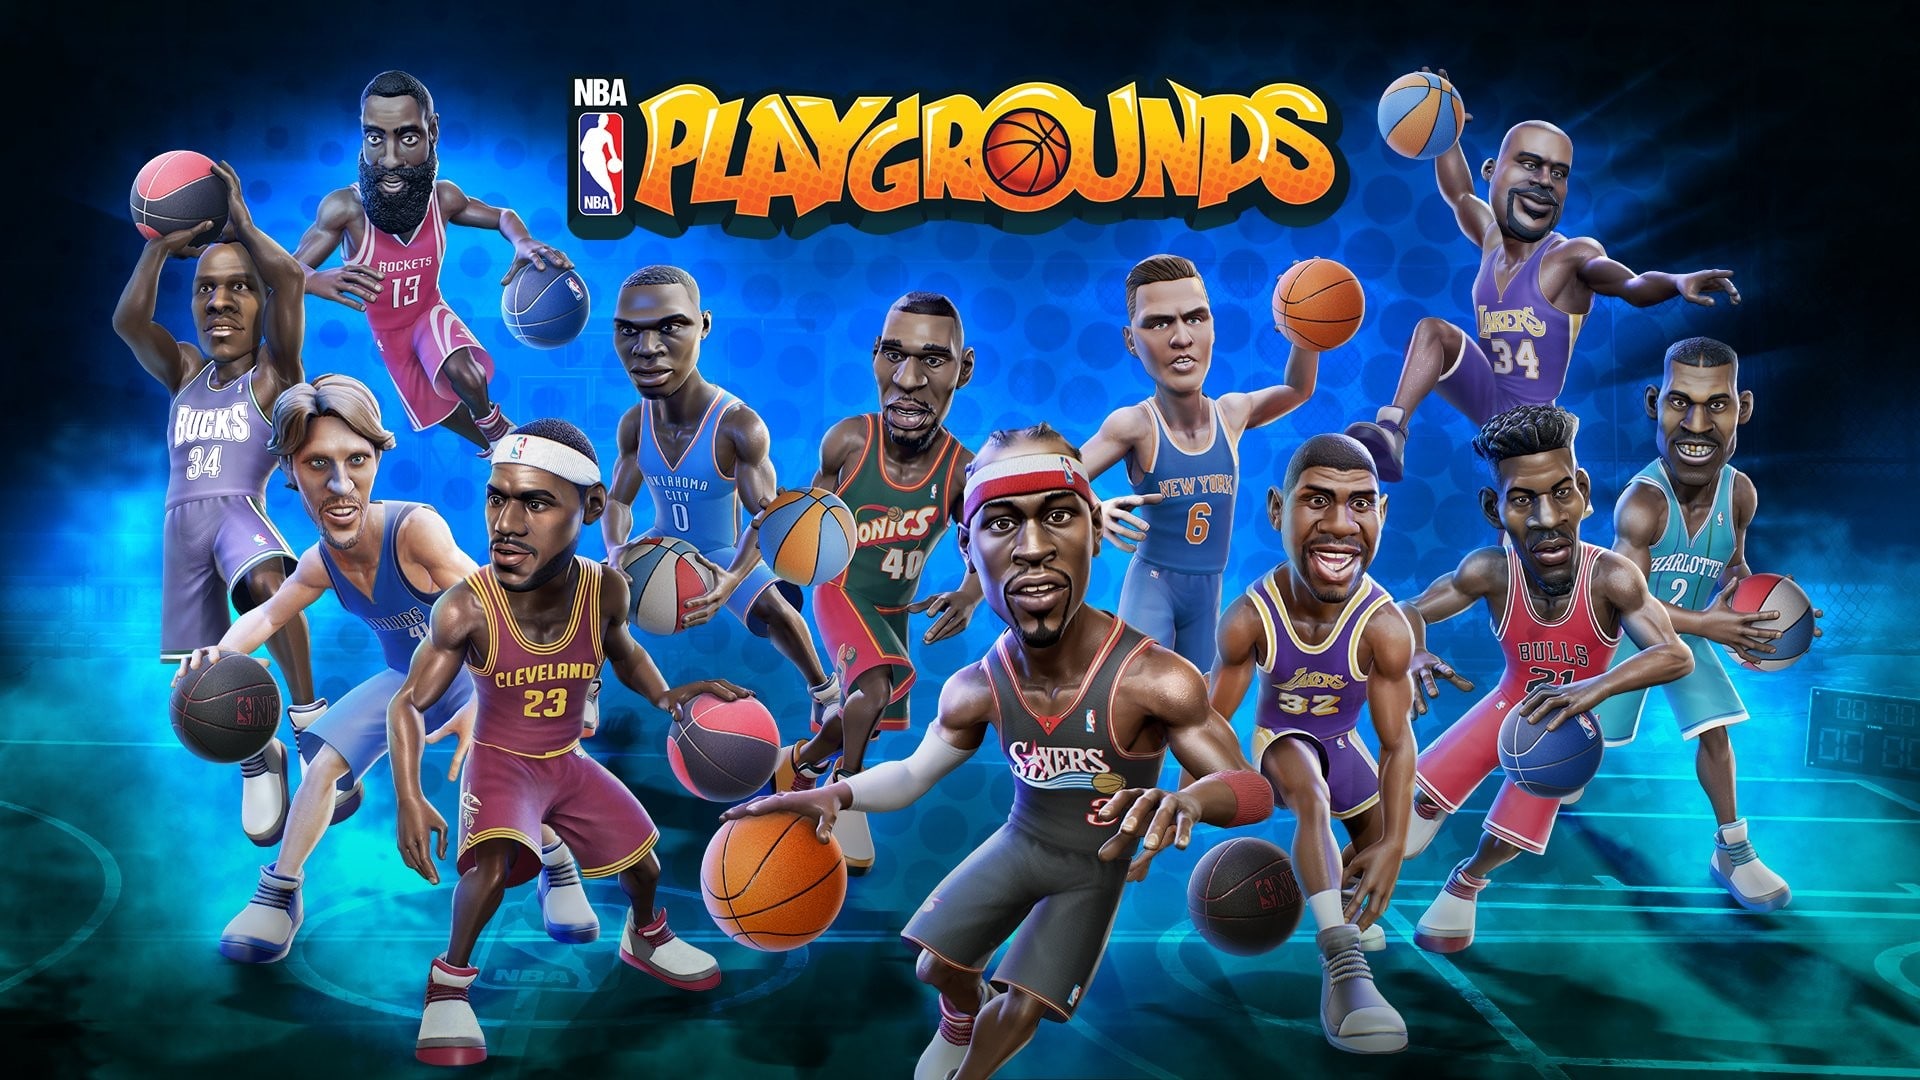 NBA Playgrounds disponible a partir de Mayo 9